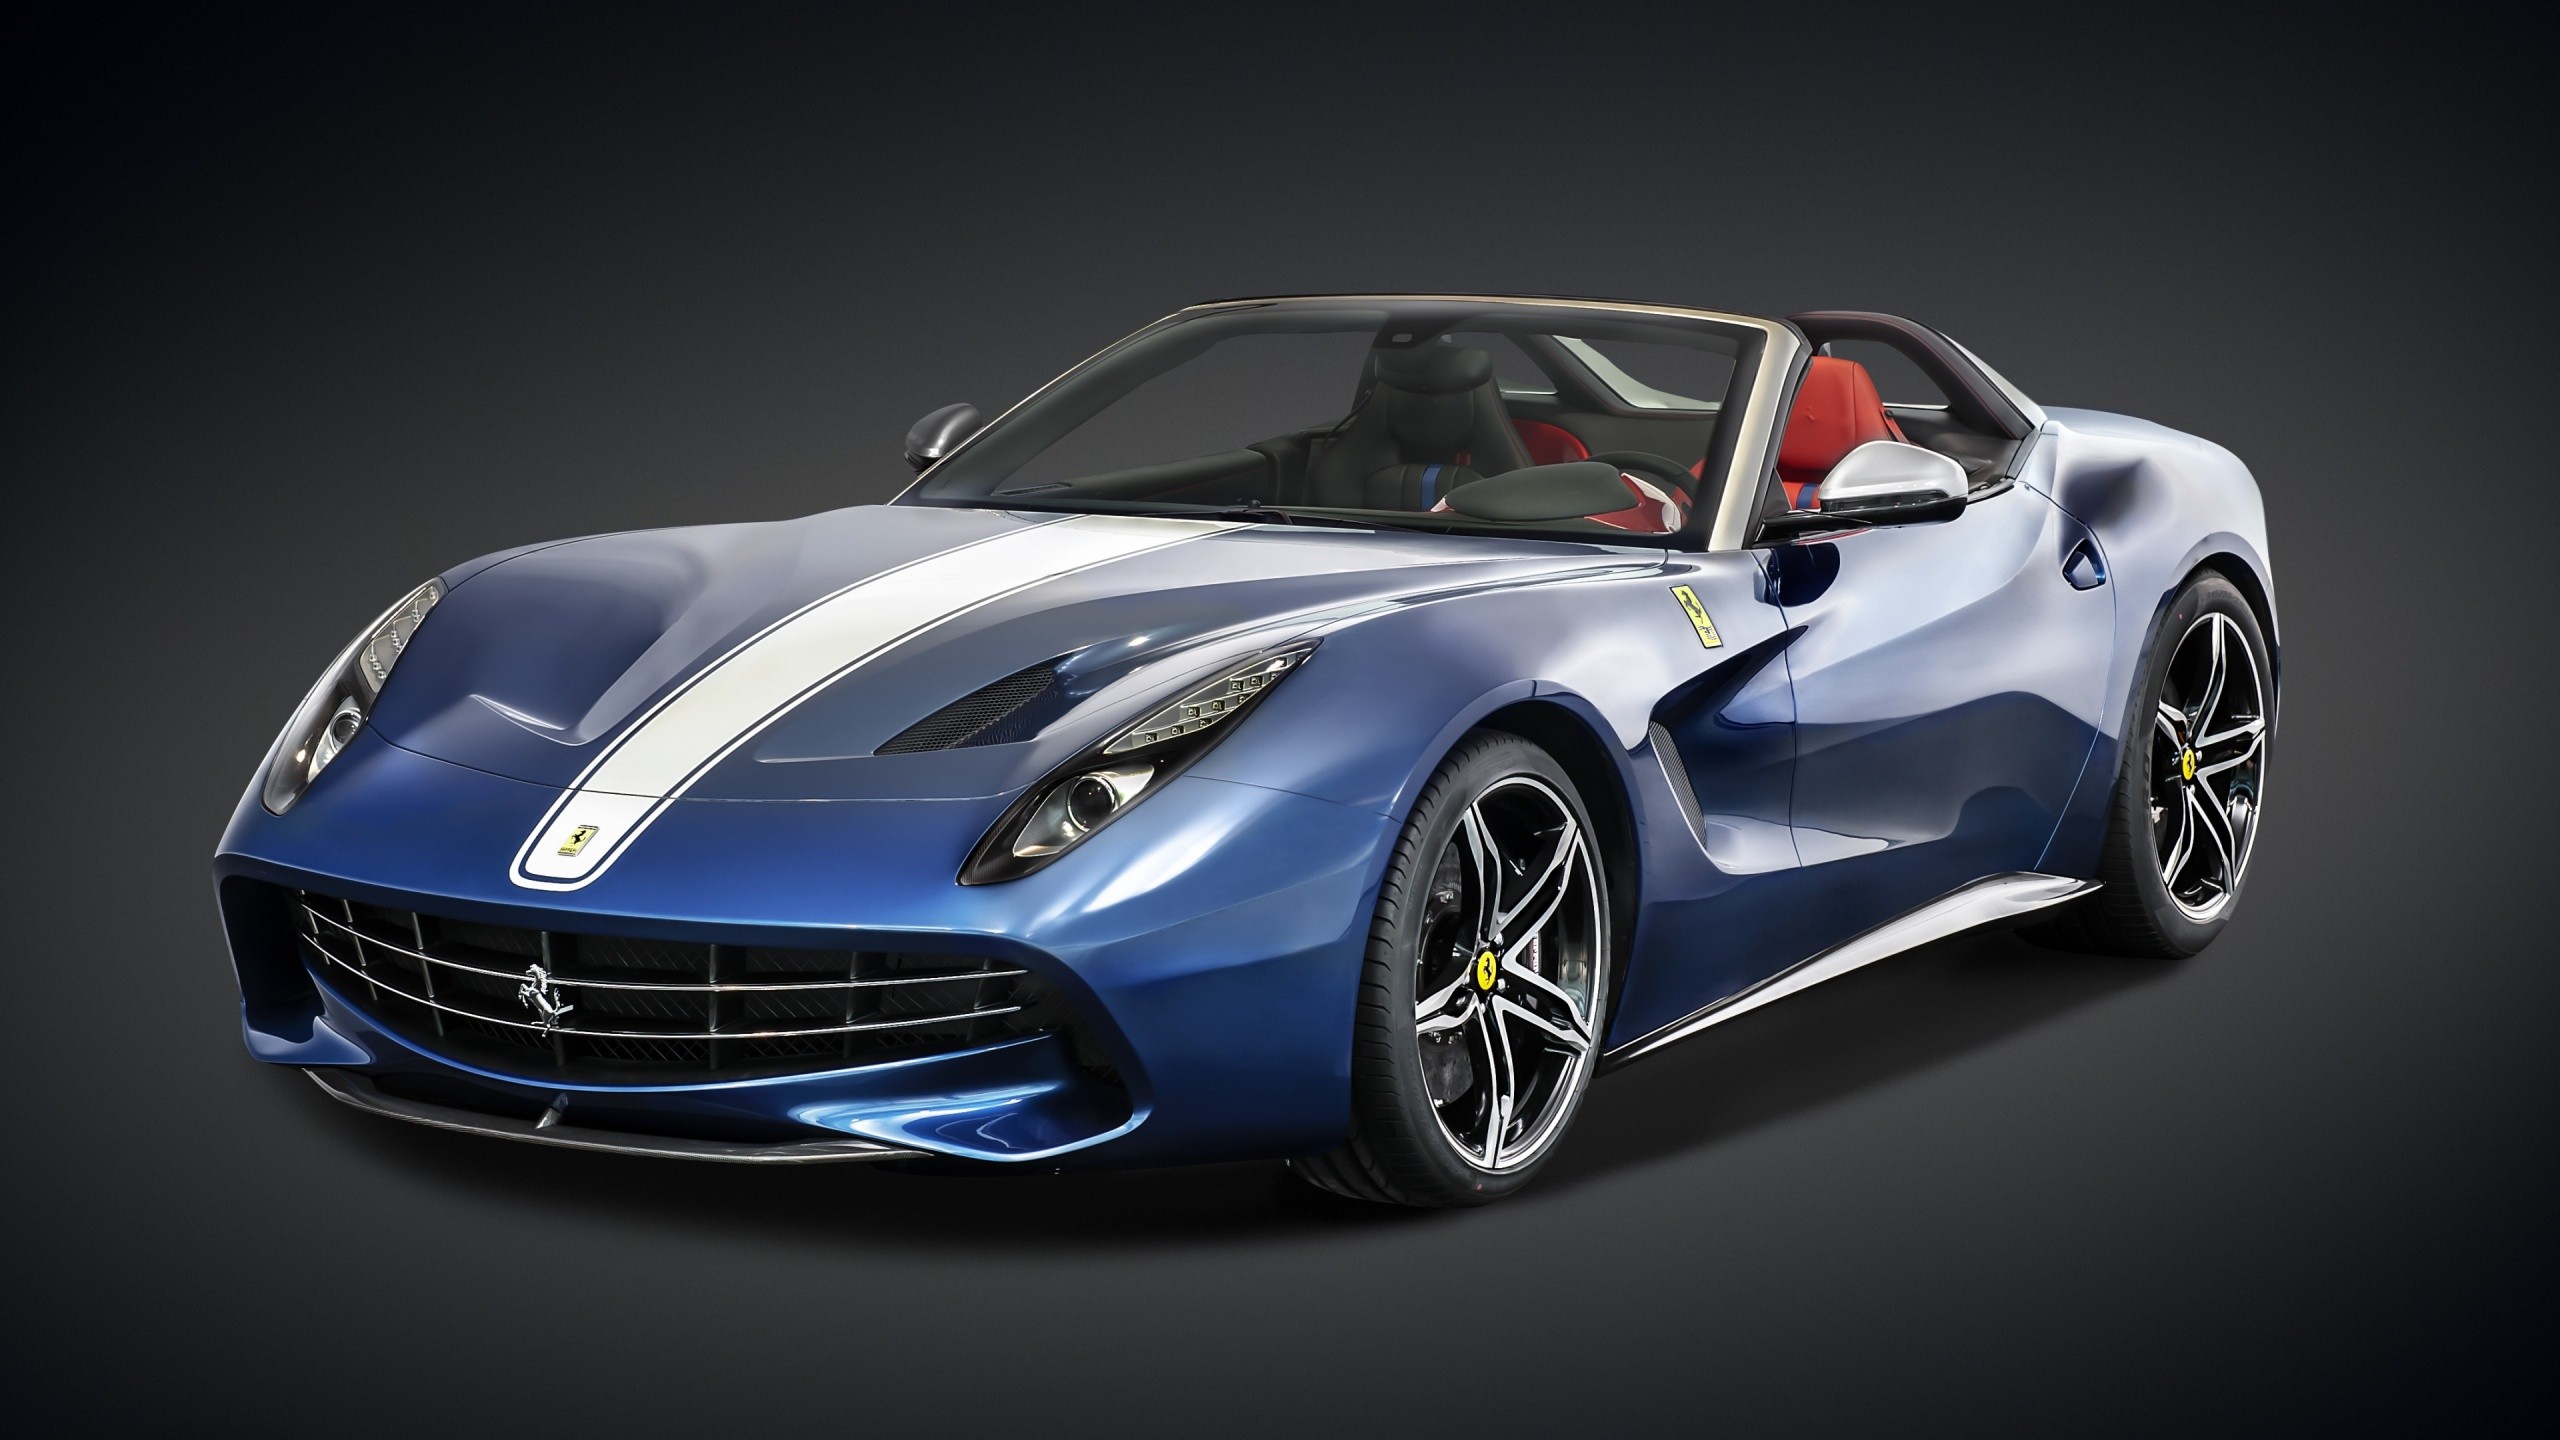 General 2560x1440 car Ferrari blue cars vehicle simple background italian cars Stellantis